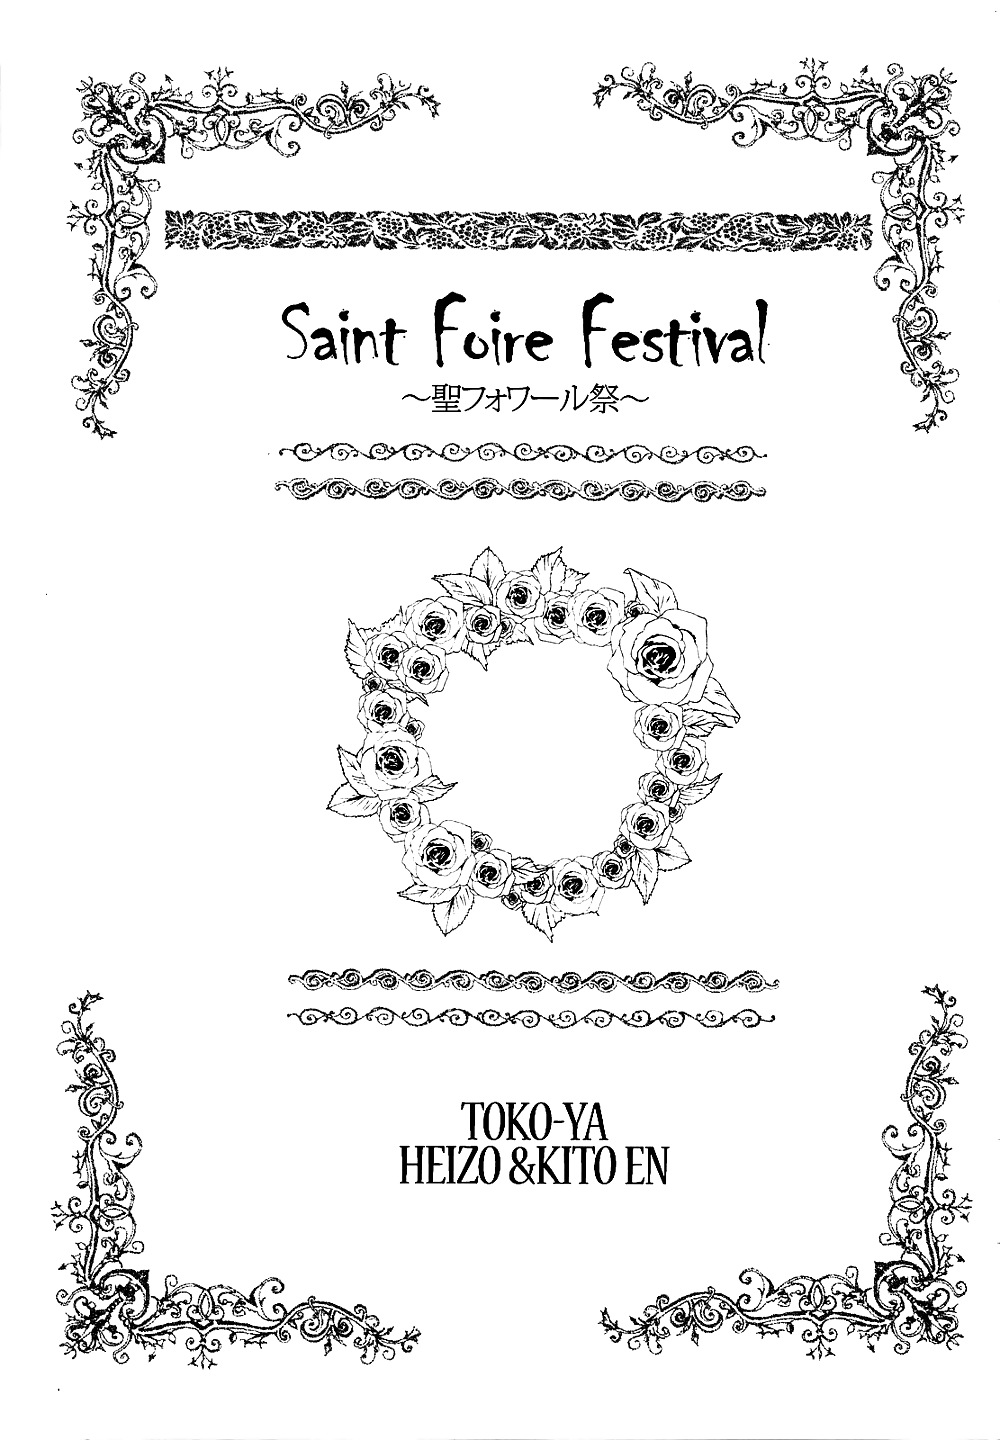 Toko-ya, saint foire festival 01
 #17540805